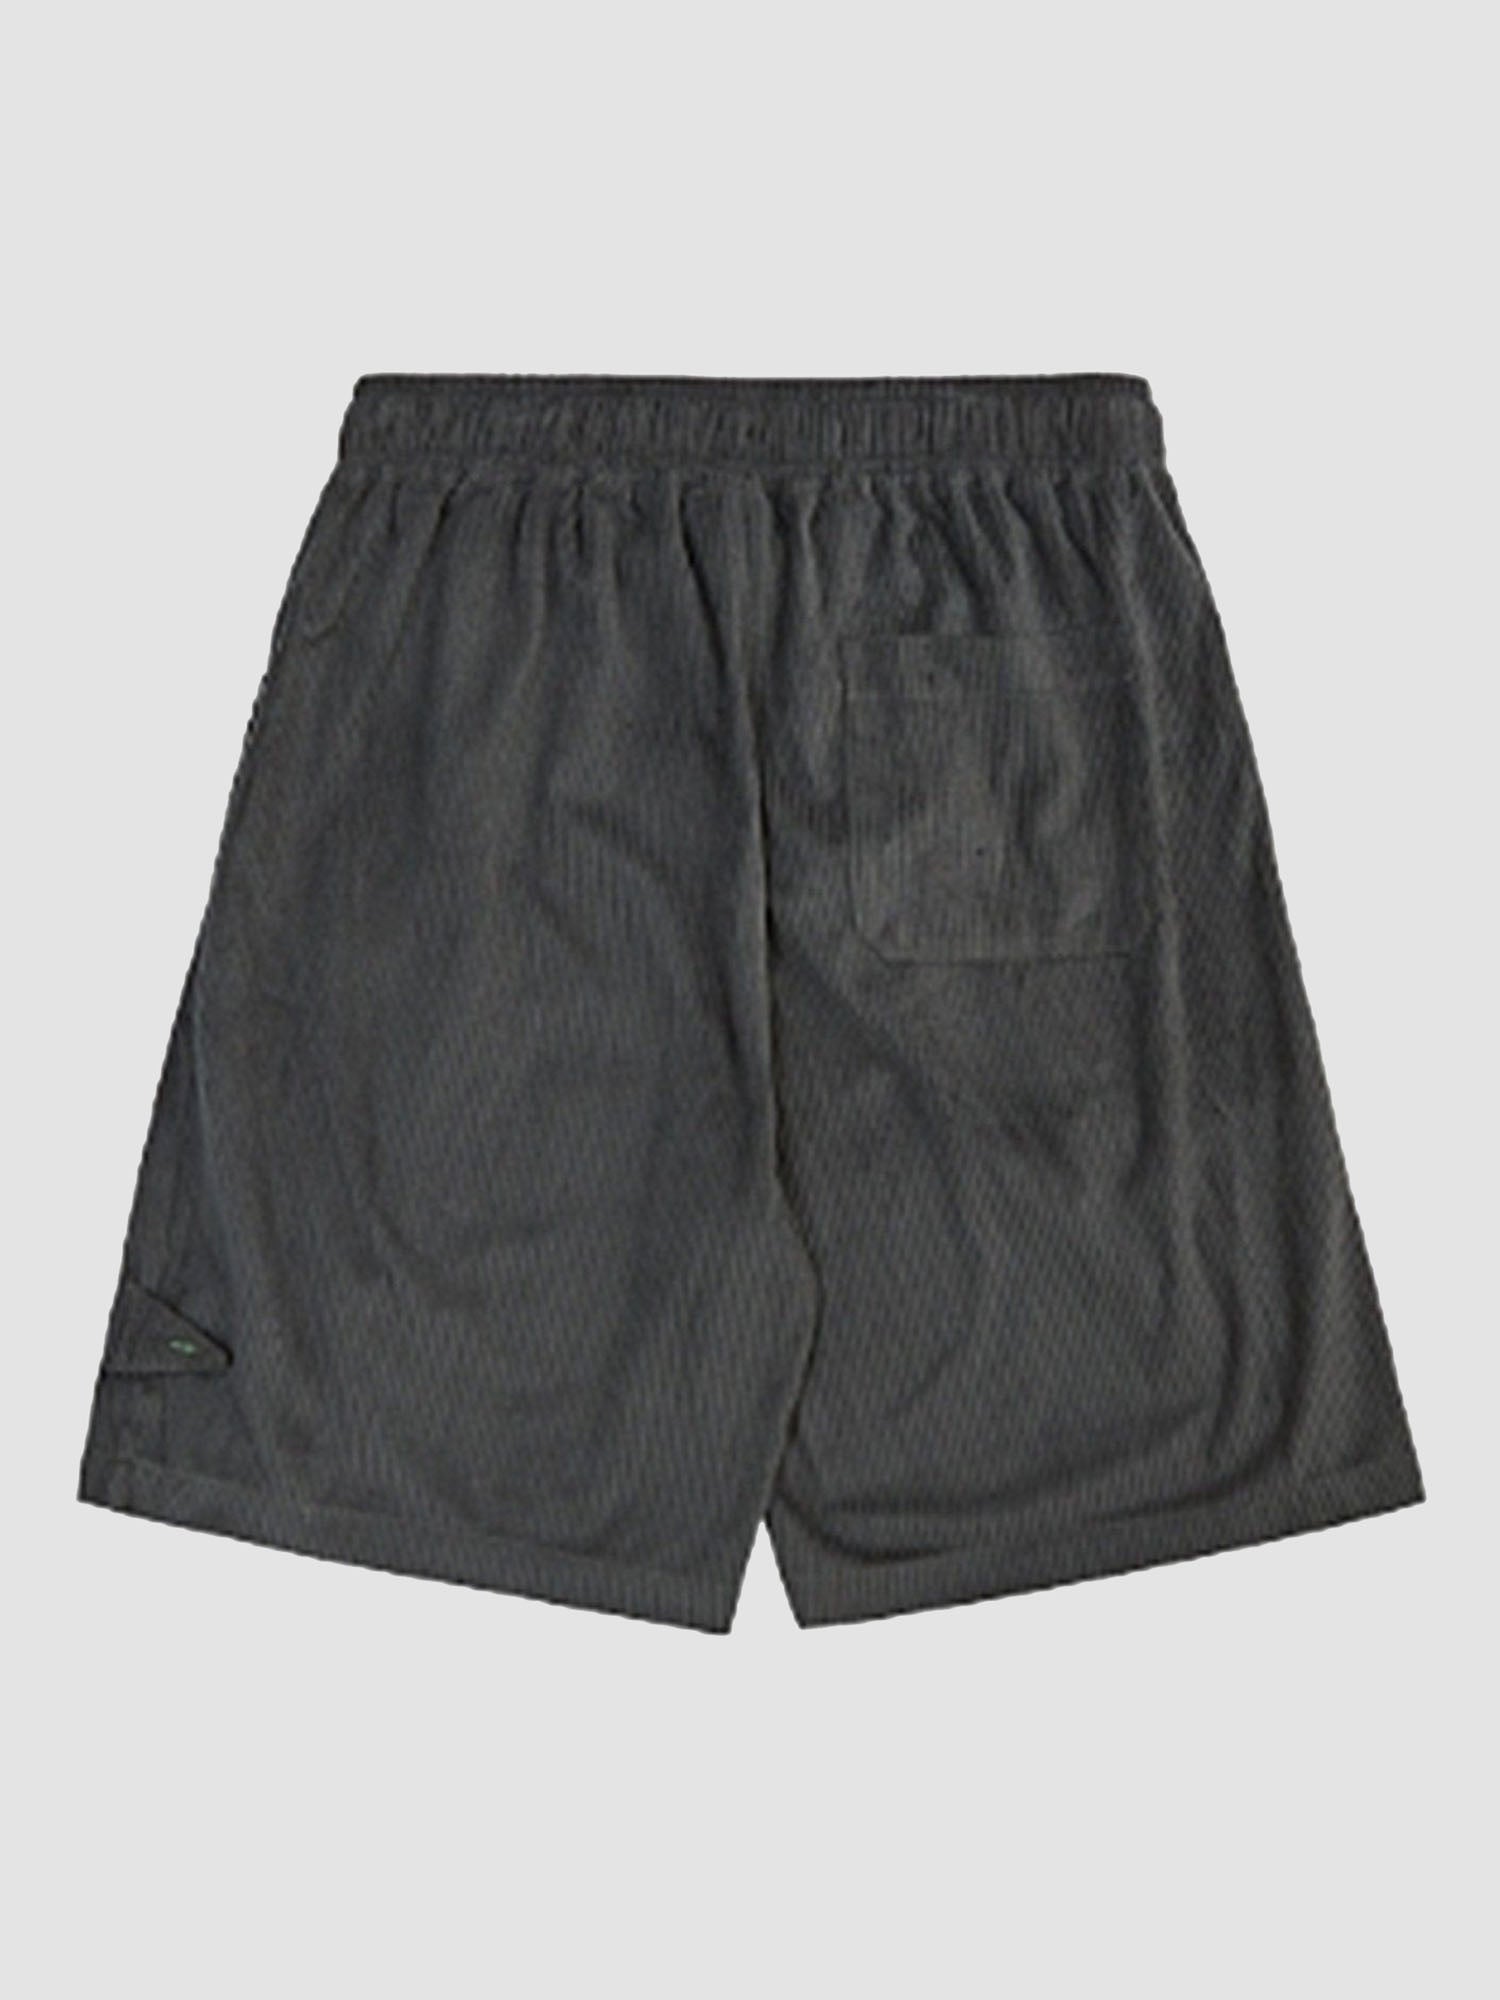 JUSTNOTAG Solid Corduroy Shorts